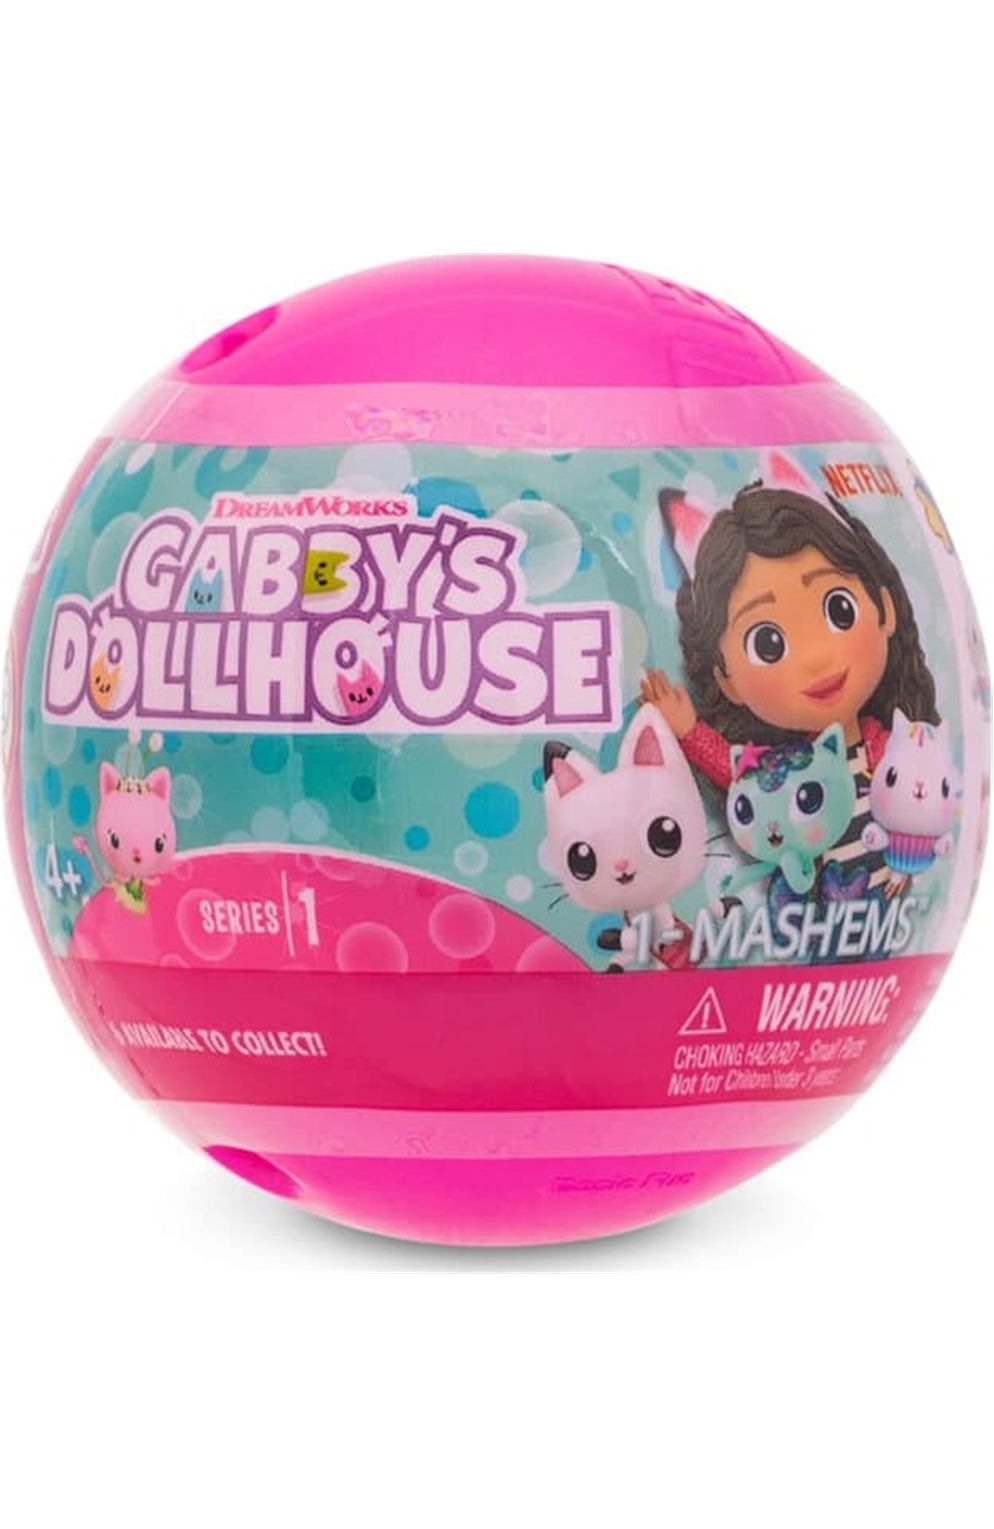 Mashems Series 1 Gabby's Dollhouse Mystery Pack 